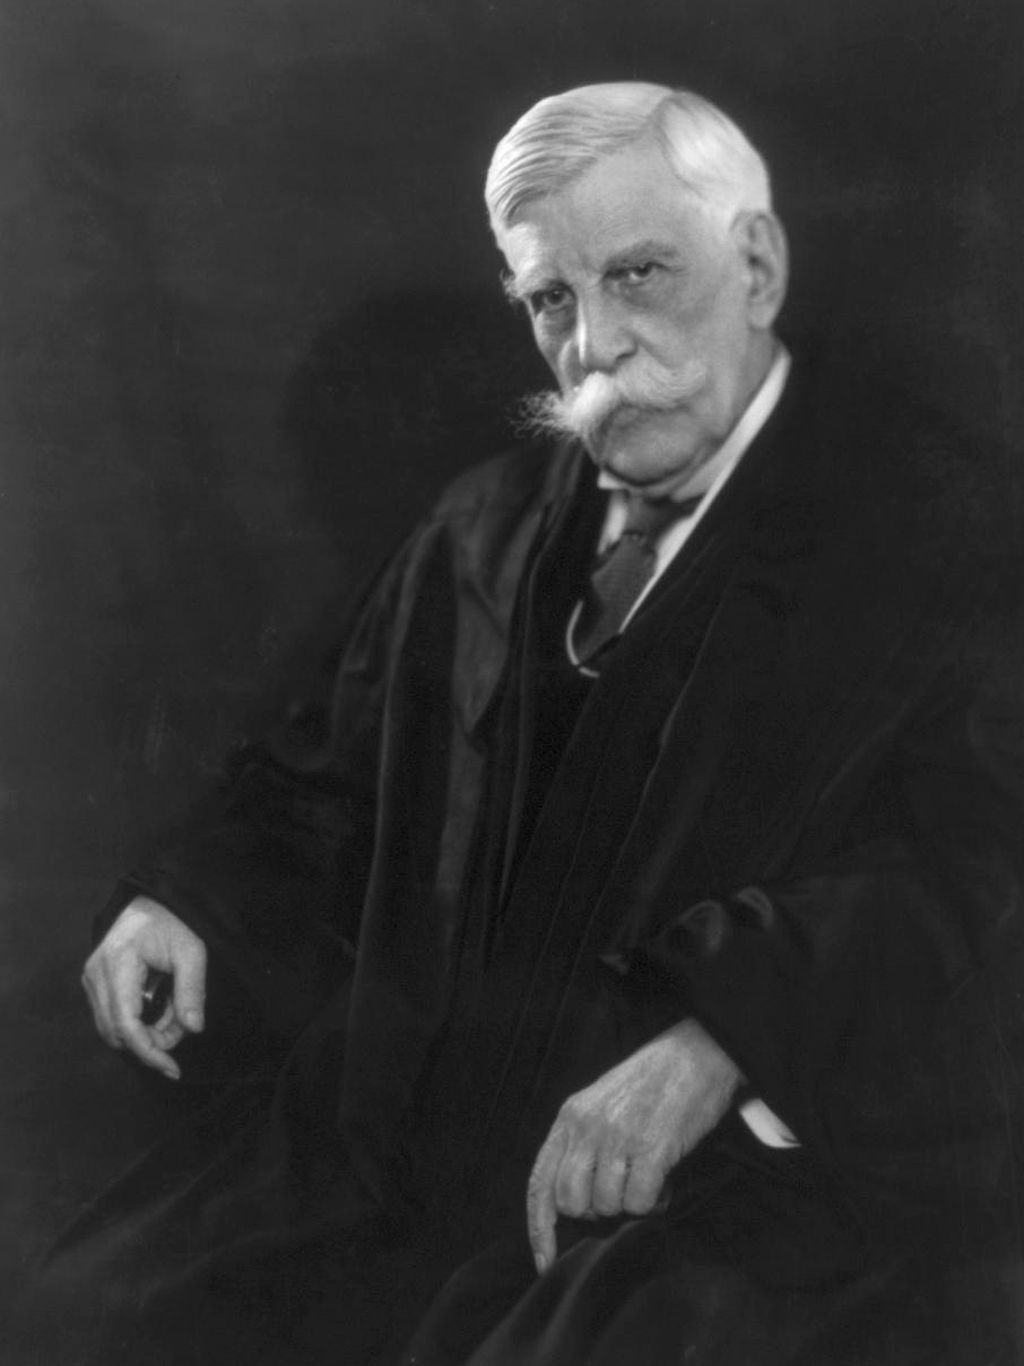 Justice Holmes around 1930.